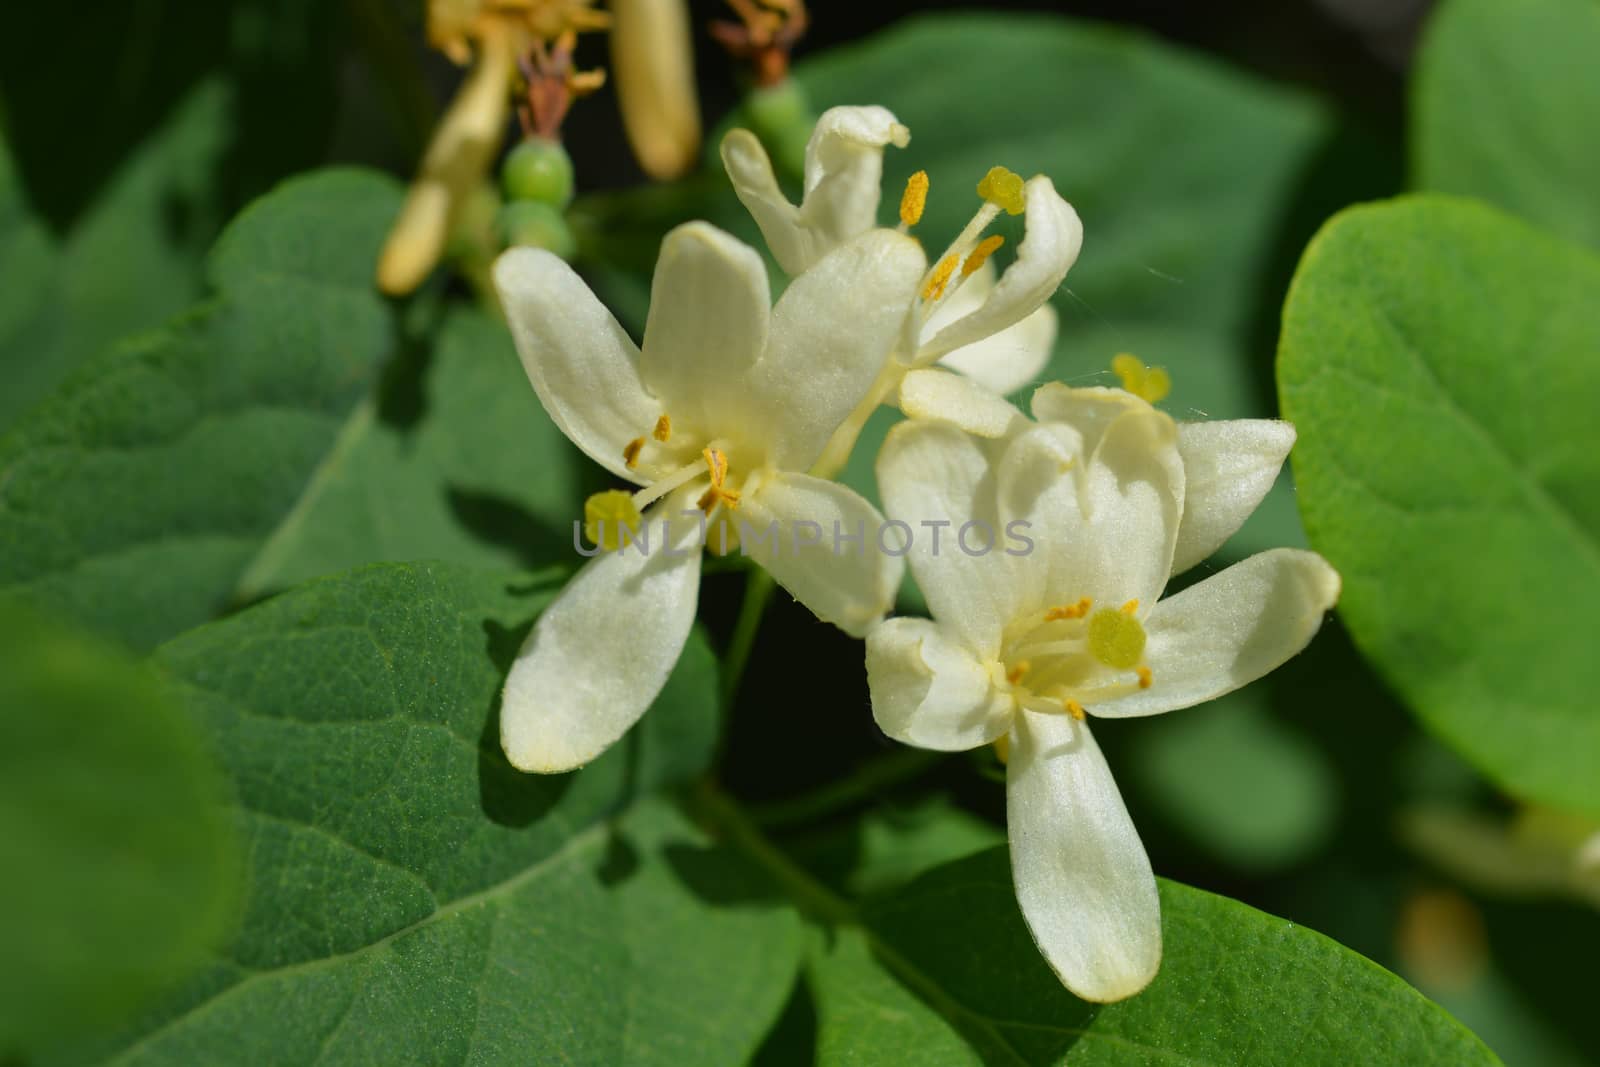 Morrows honeysuckle flowers - Latin name - Lonicera morrowii